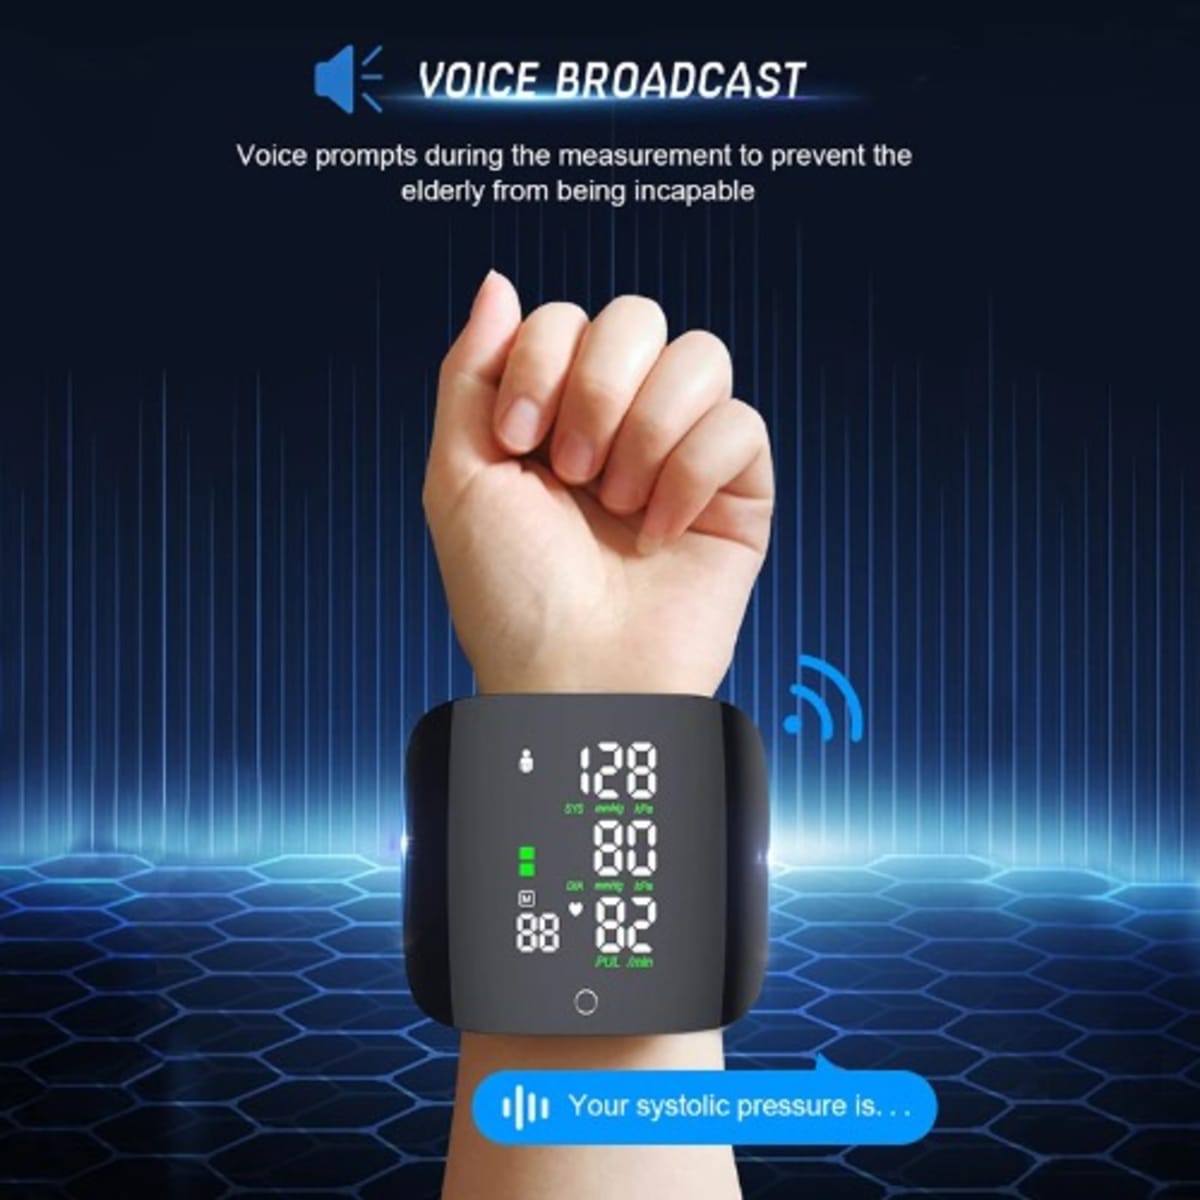 Vive Health Wrist Blood Pressure monitor : BT-V -Vive